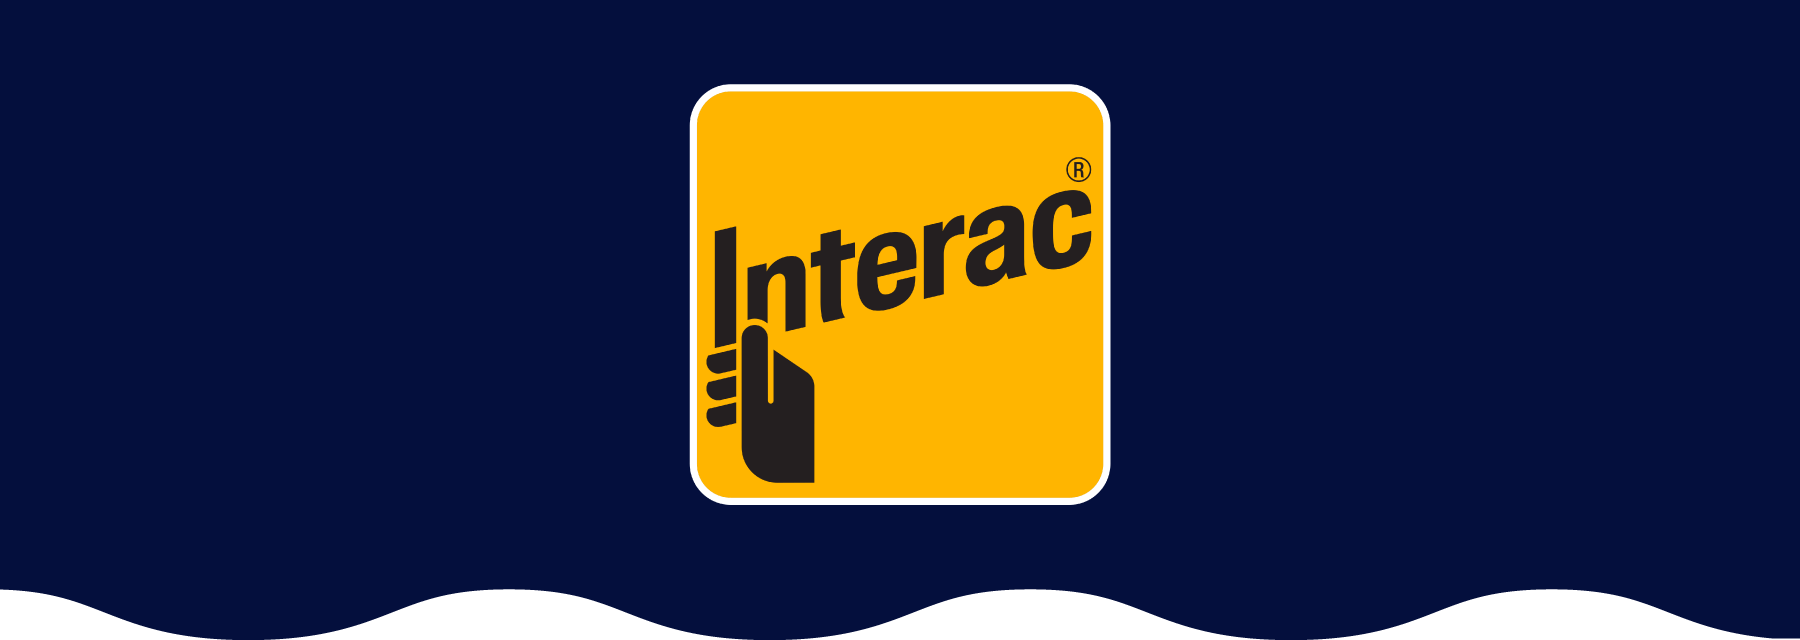 Interac payment logo 